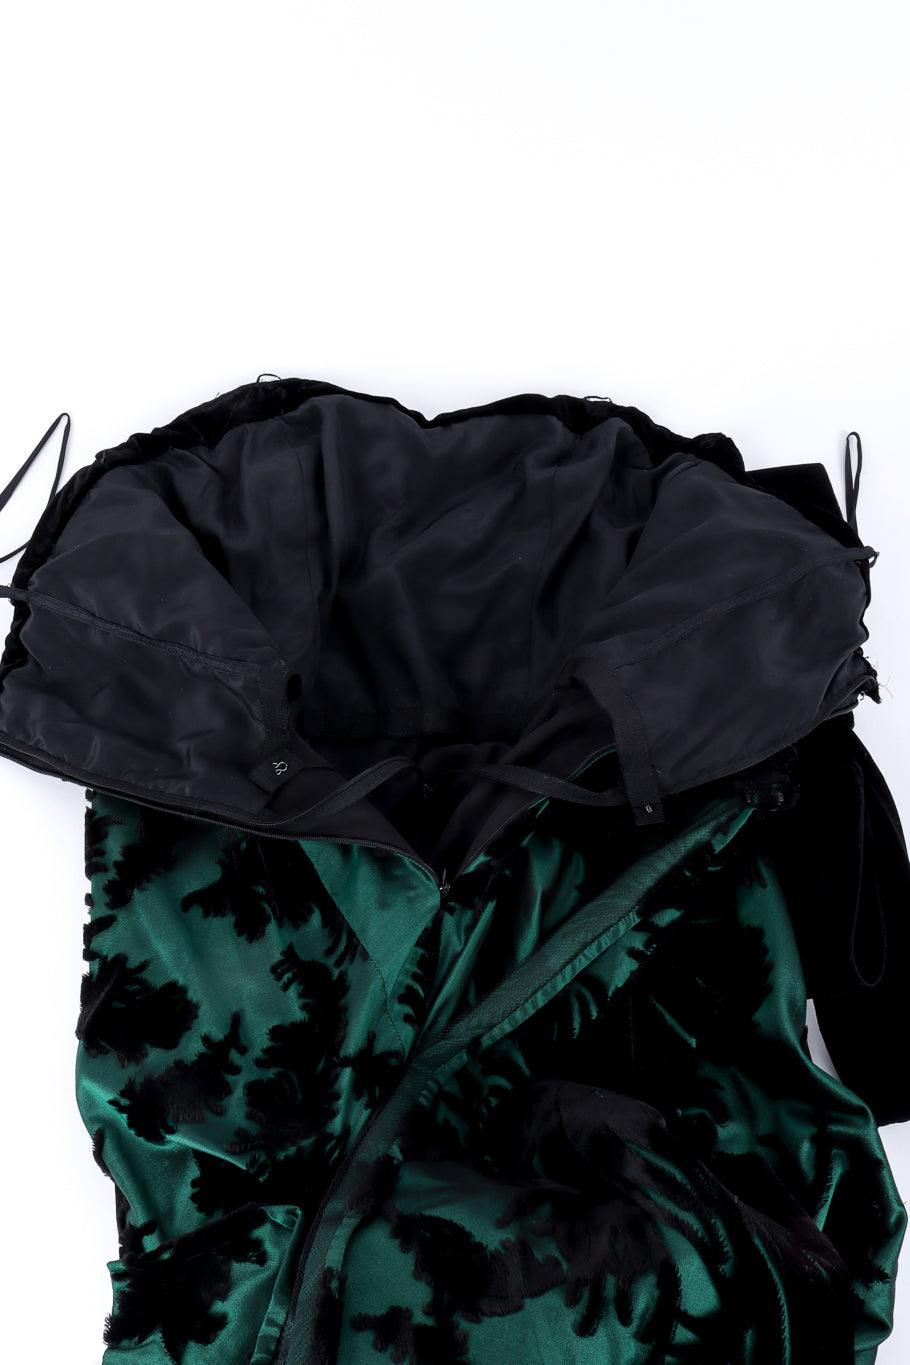 Strapless Velvet Feather Empire Gown by Bill Blass unzipped @recessla